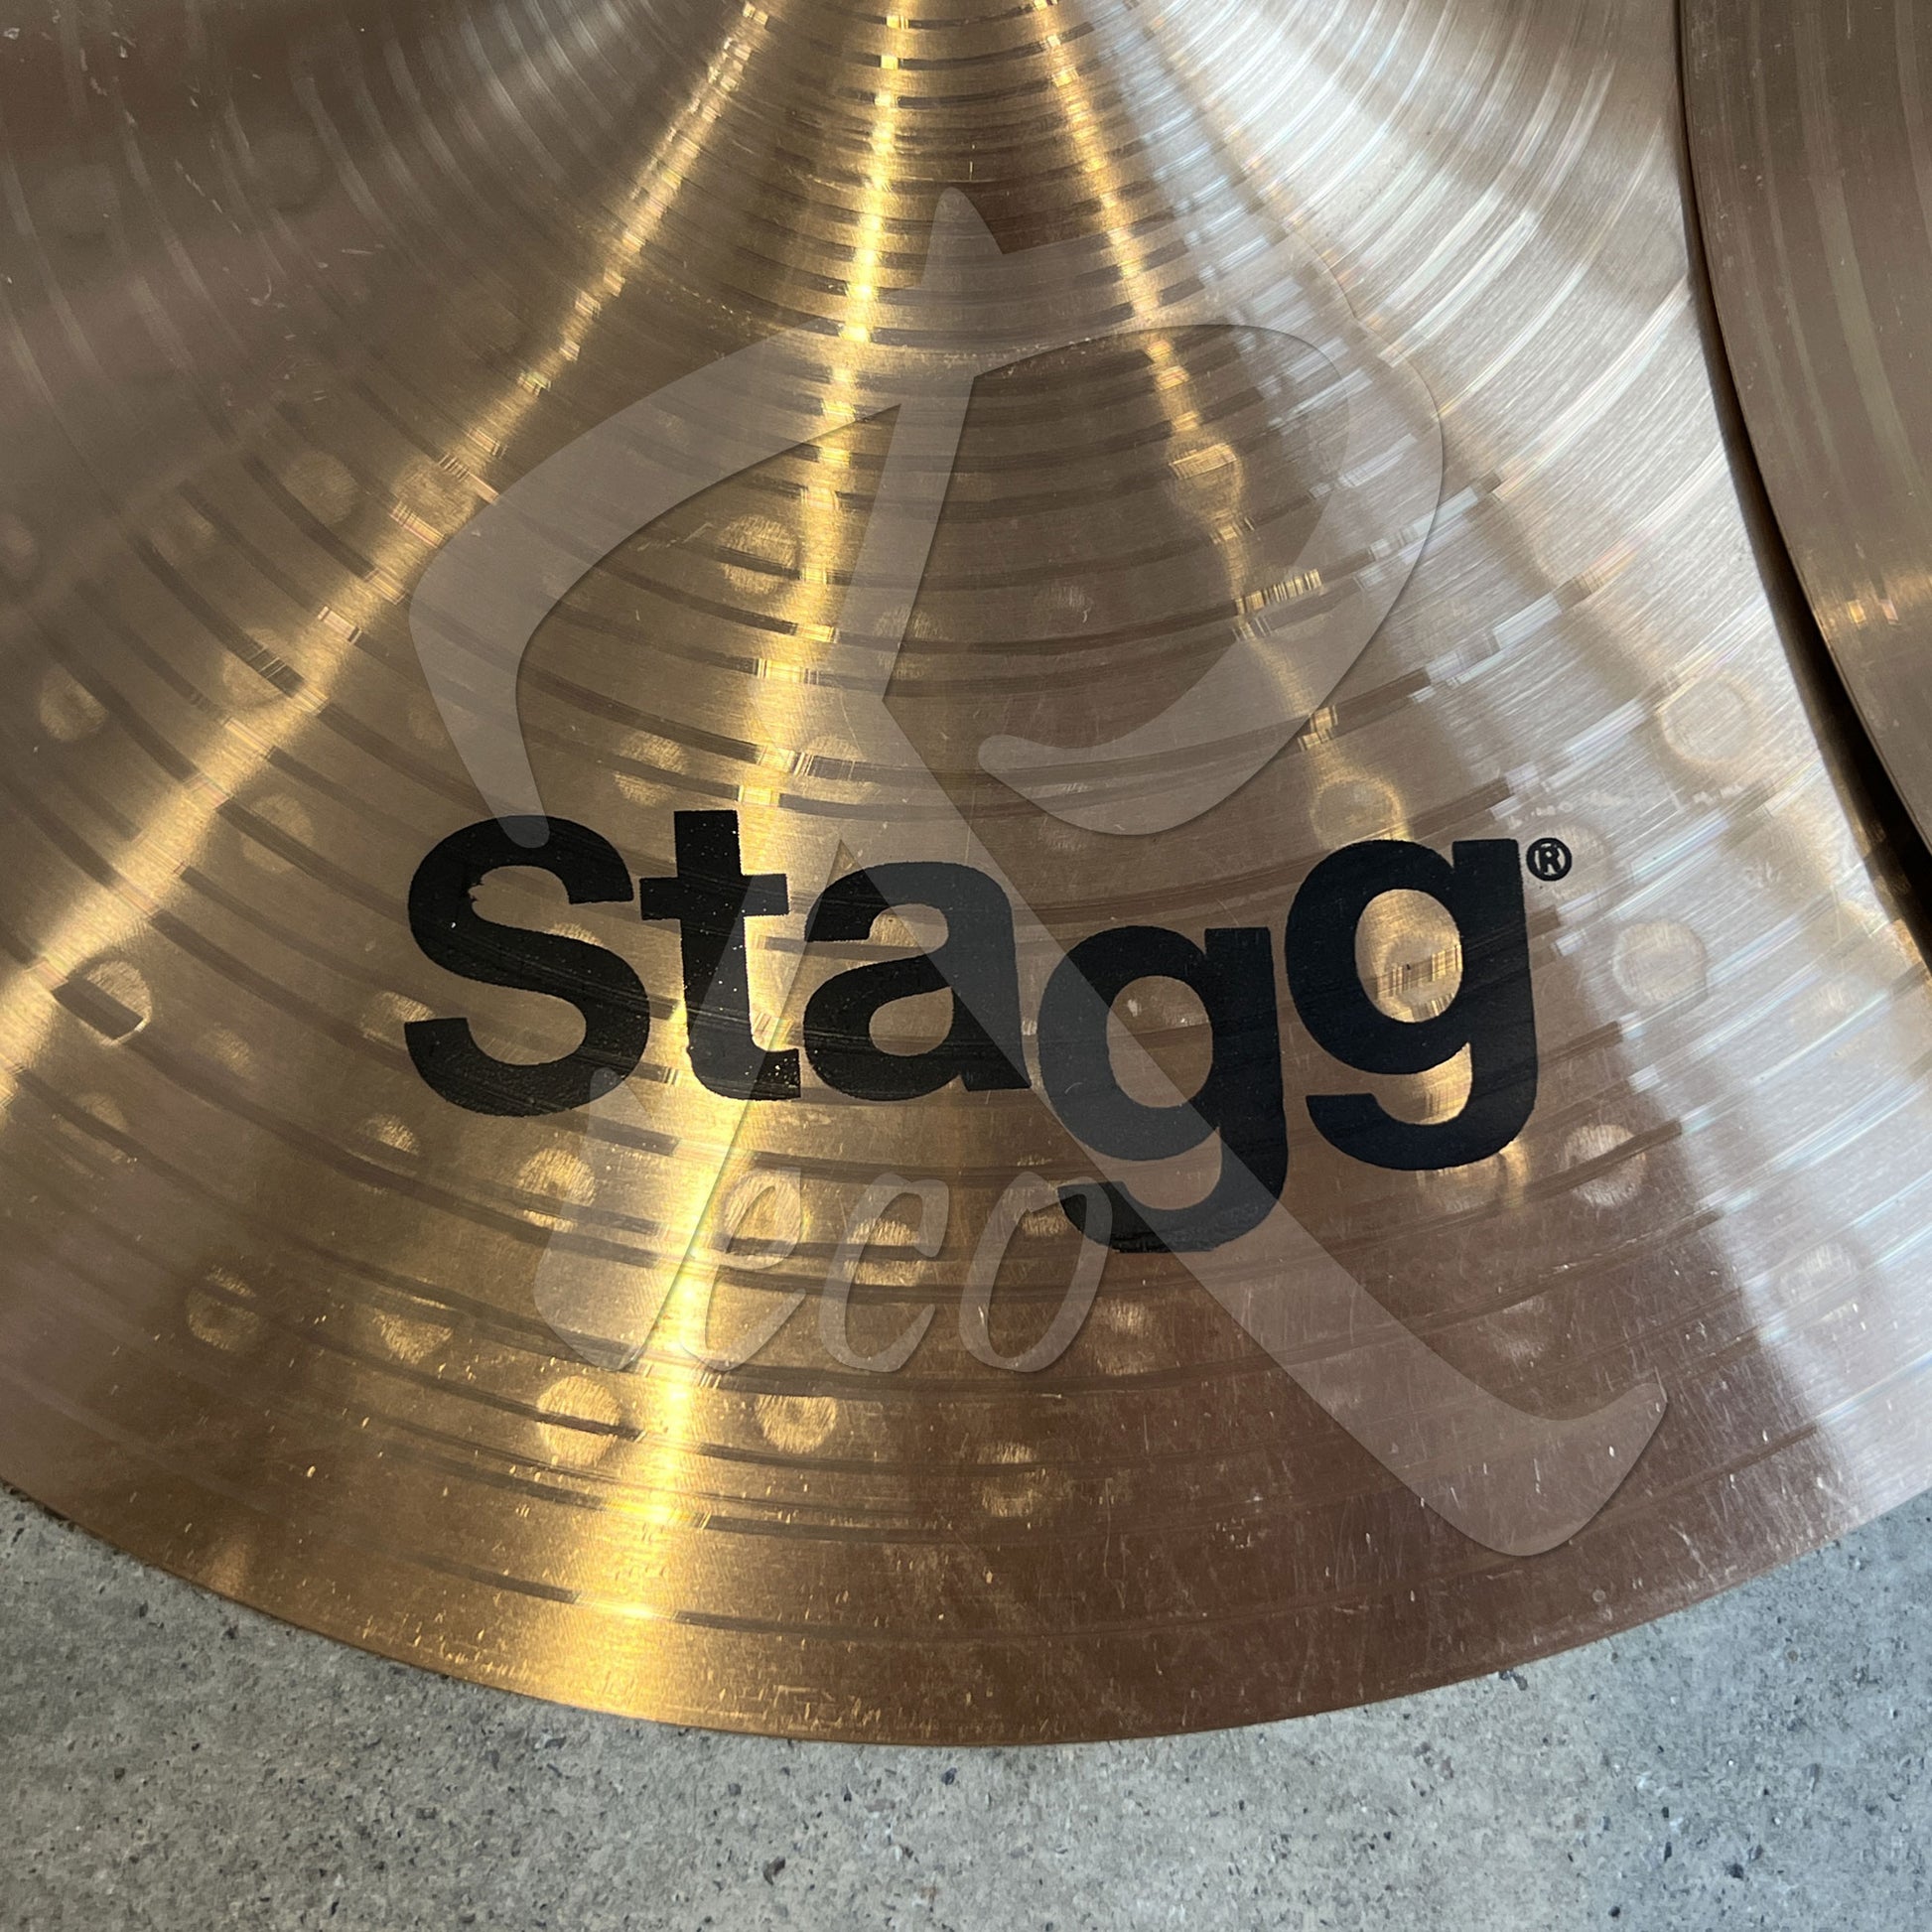 Stagg EX-HM14B 14” EX Brilliant Medium Hi-hat Cymbal - Reco Music Malaysia